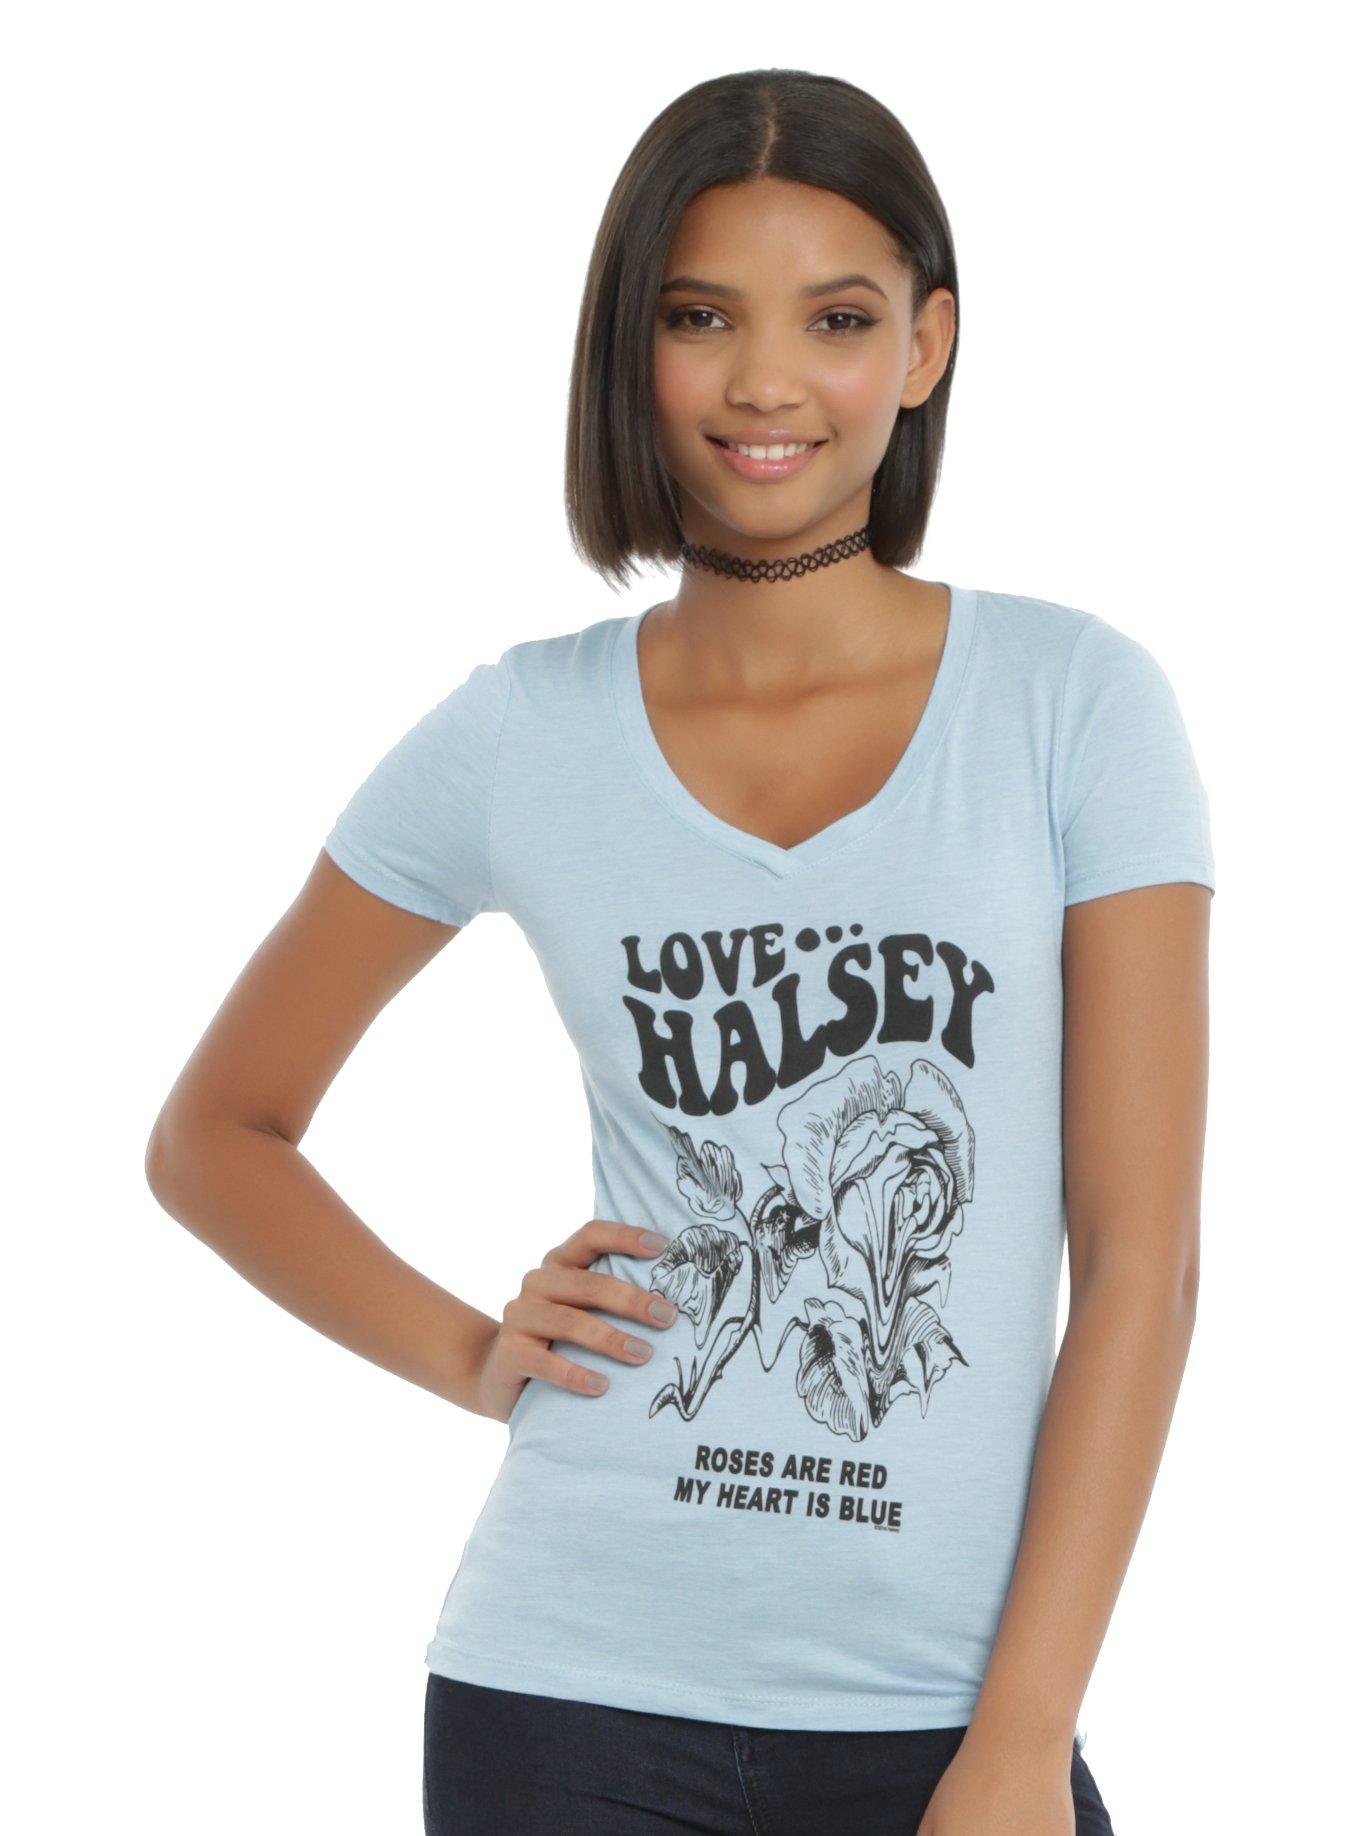 Halsey Blue Warped Rose Girls T-Shirt | Hot Topic